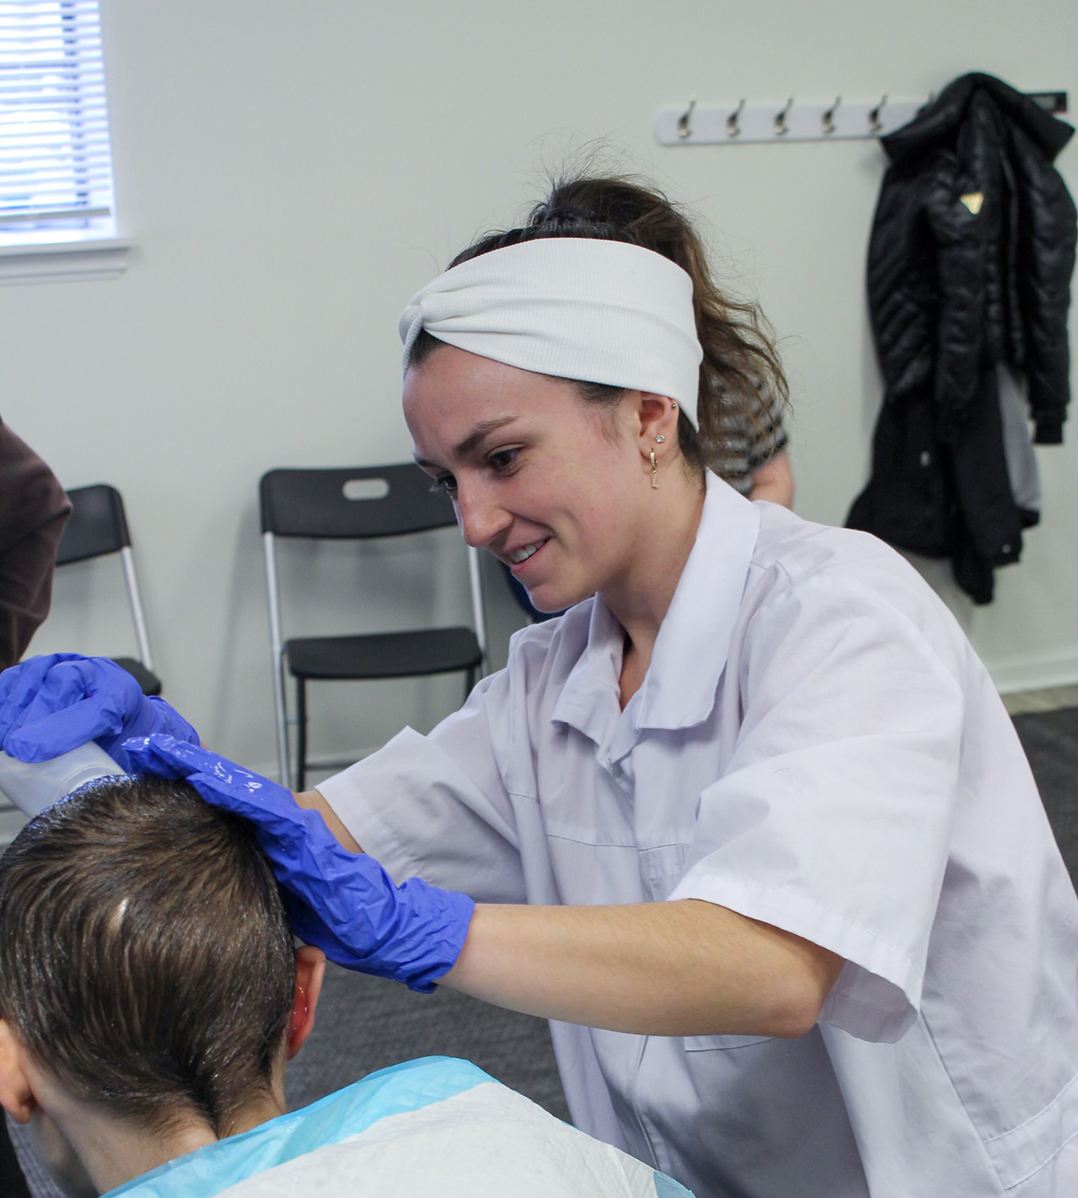 Lice treatment salon opens in Carmel